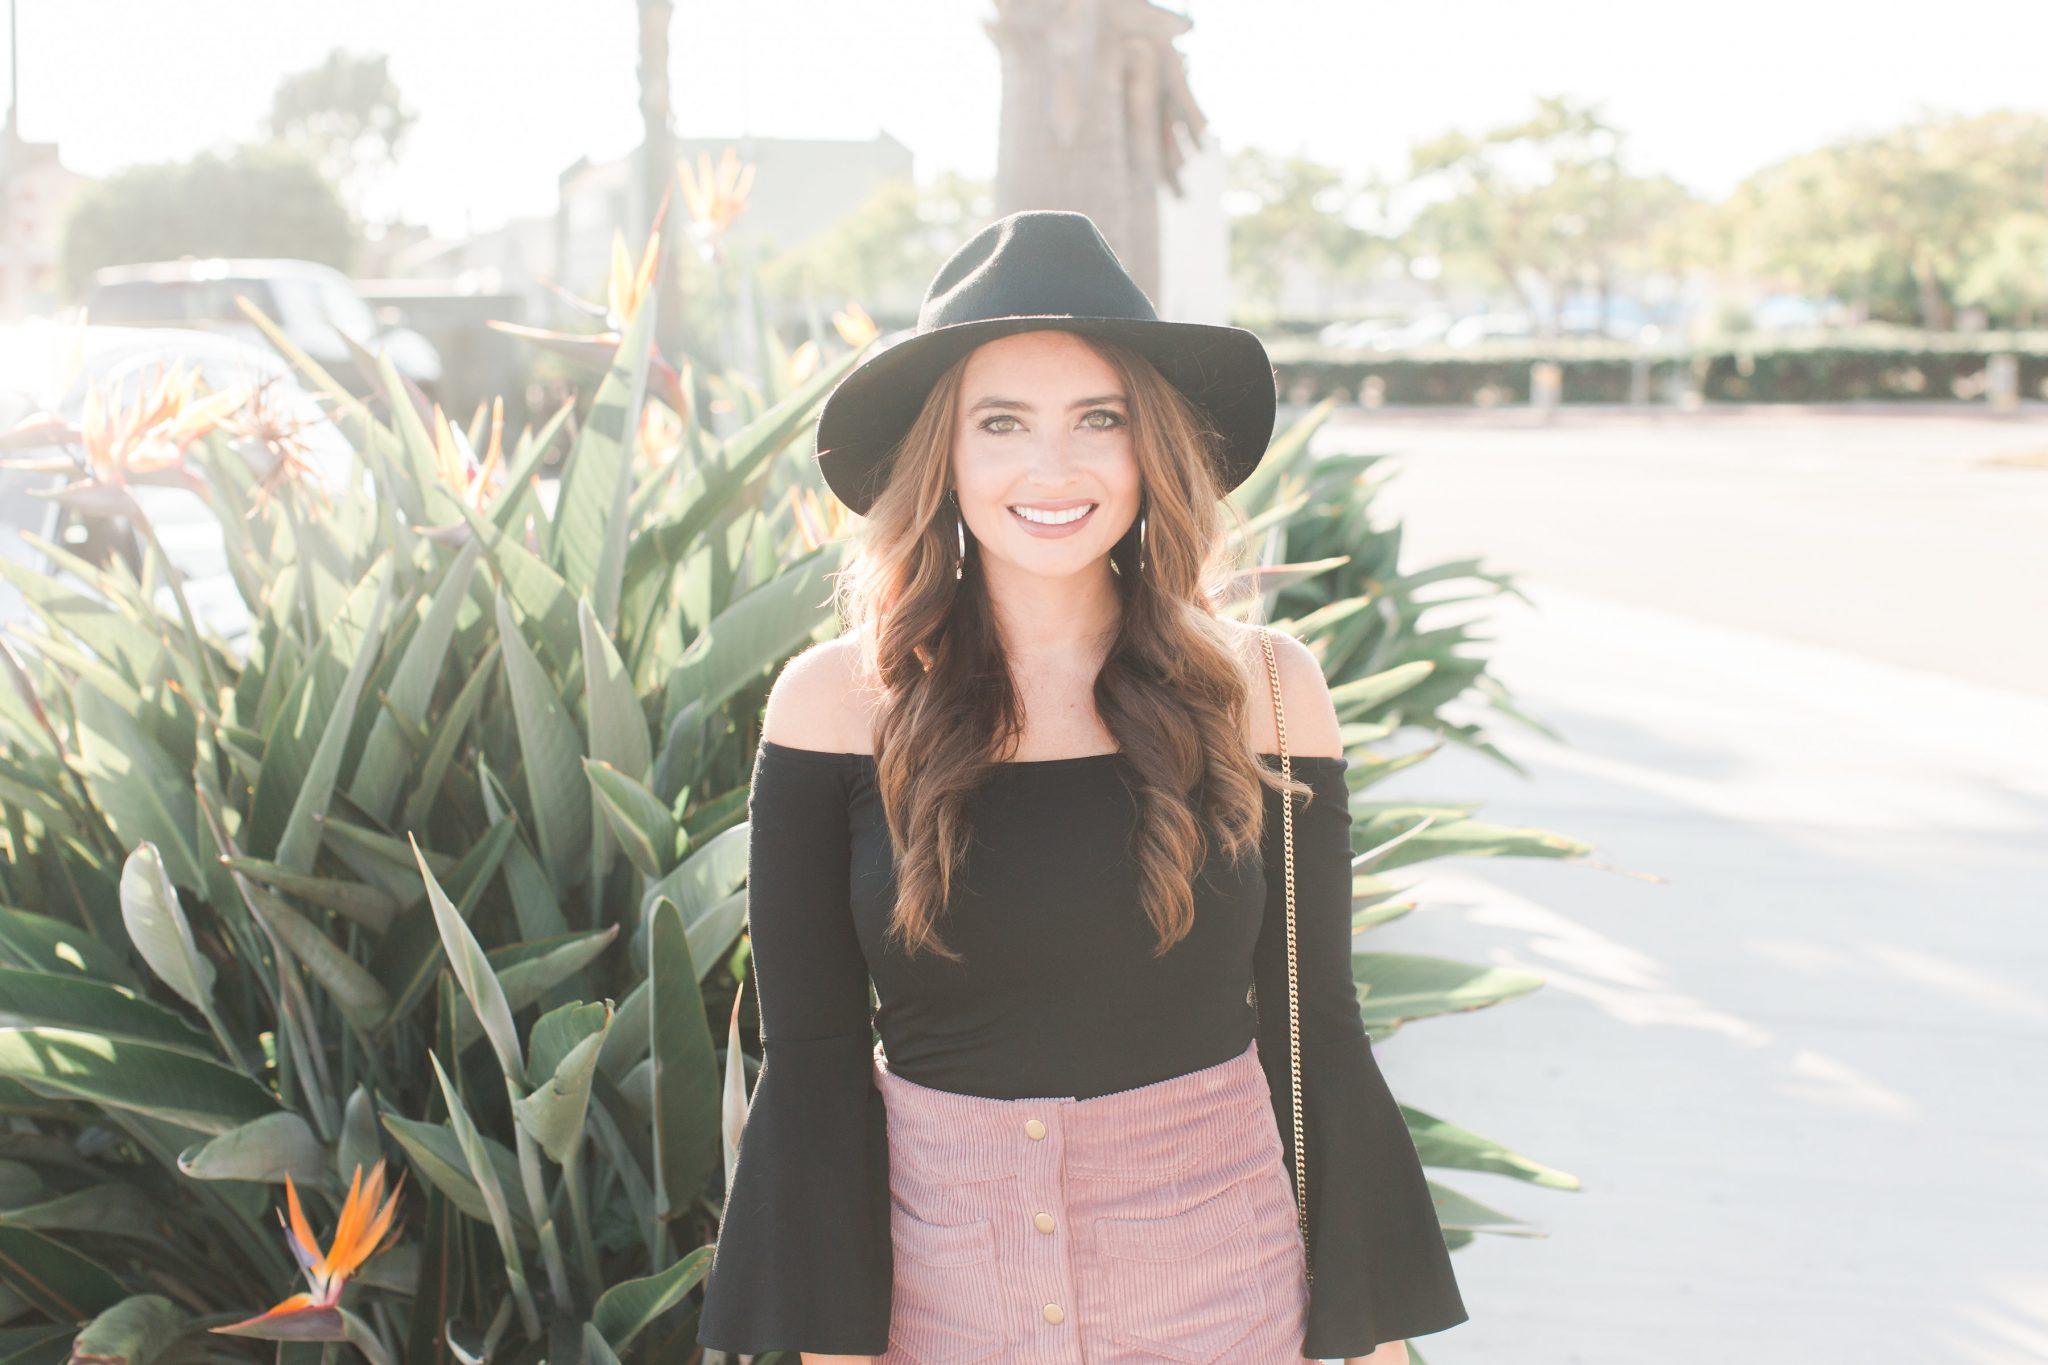 Corduroy Mini skirt styled by popular Orange County fashion blogger, Maxie Elle